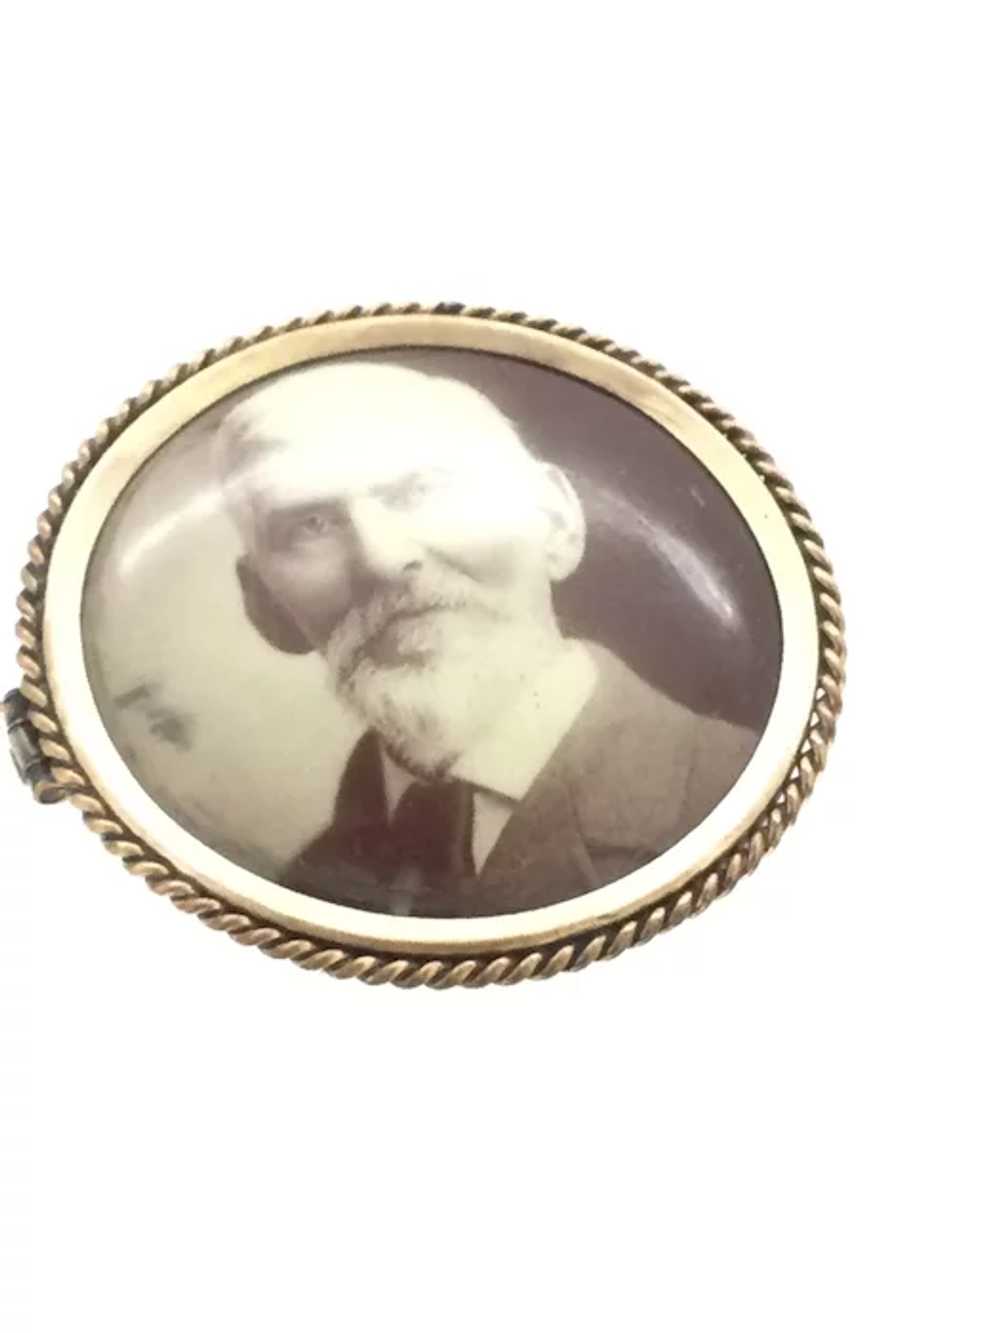 Edwardian Miniature Photograph Brooch Pin - image 3